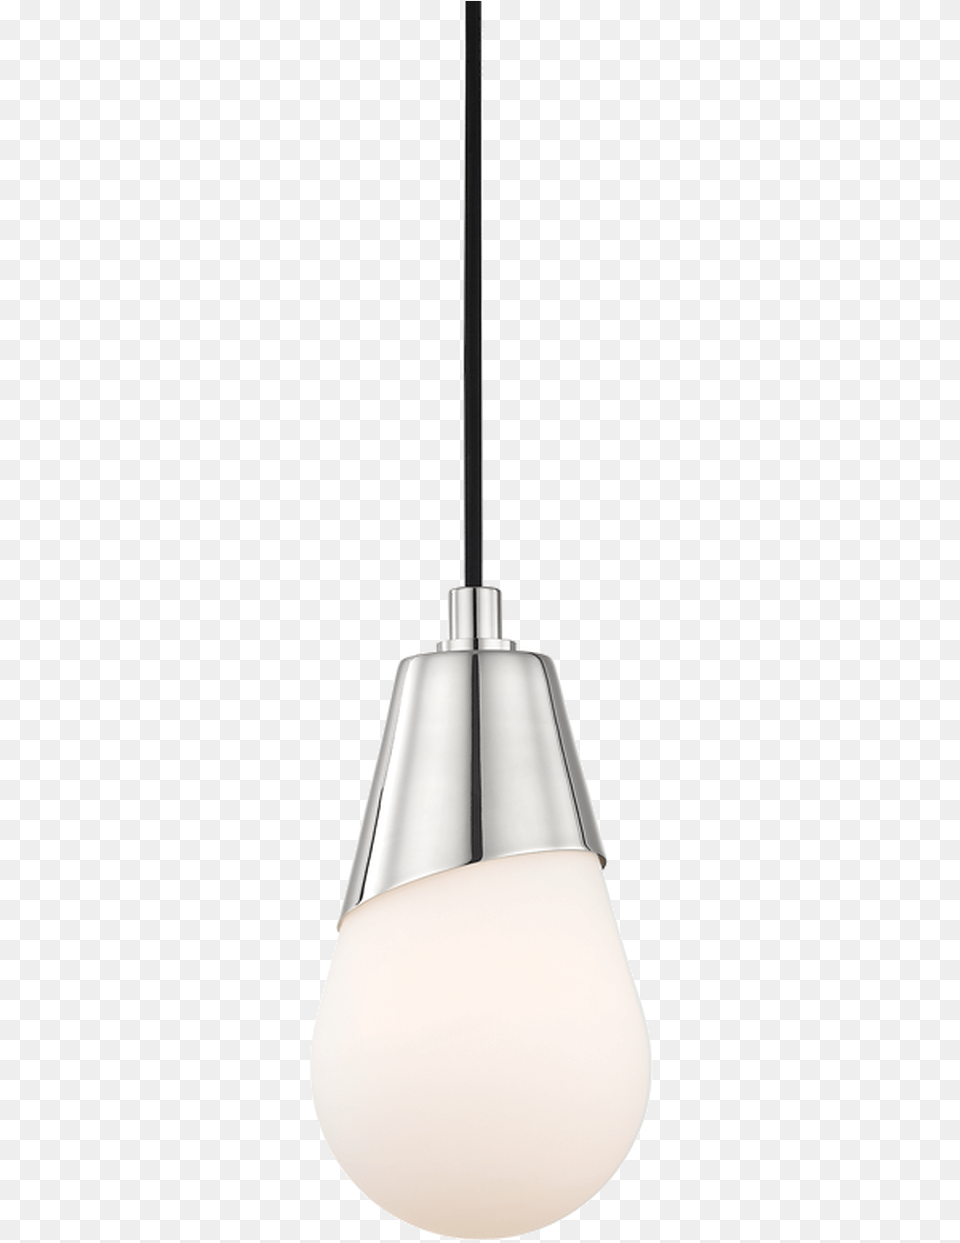 Mitzi Lighting Pn Cora Pendant Light Polished Ceiling Fixture, Lamp, Light Fixture Free Png Download